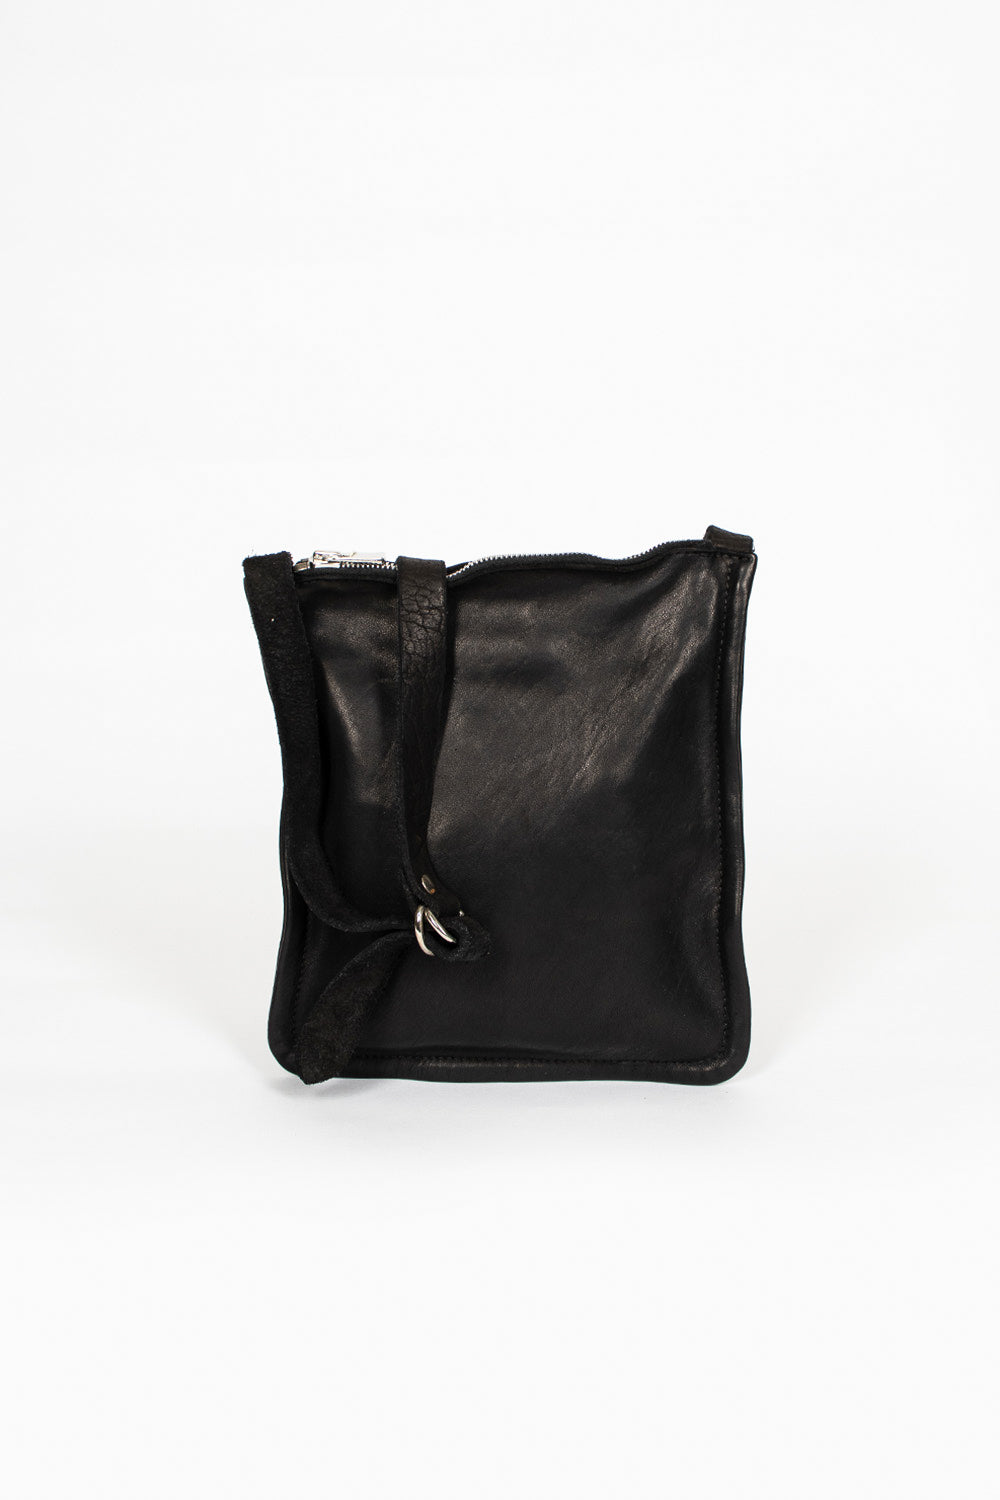 W4 Cross Body Bag Black